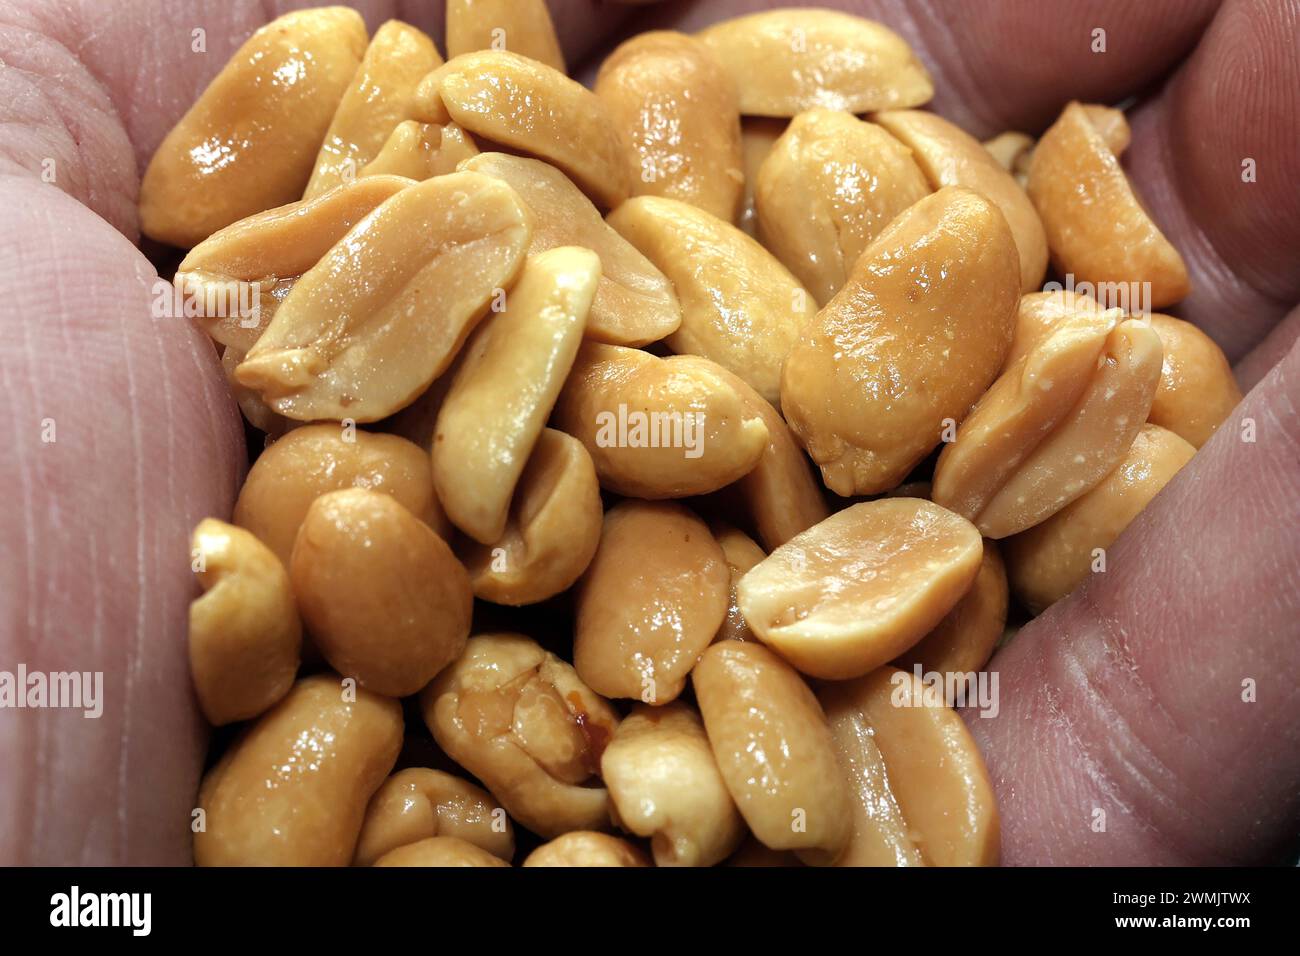 Erdnüsse als Snack Gesalzene und geröstete Erdnüsse mit hohem Fettgehalt als Snack *** Peanuts as a snack Salted and roasted peanuts with a high fat content as a snack Stock Photo